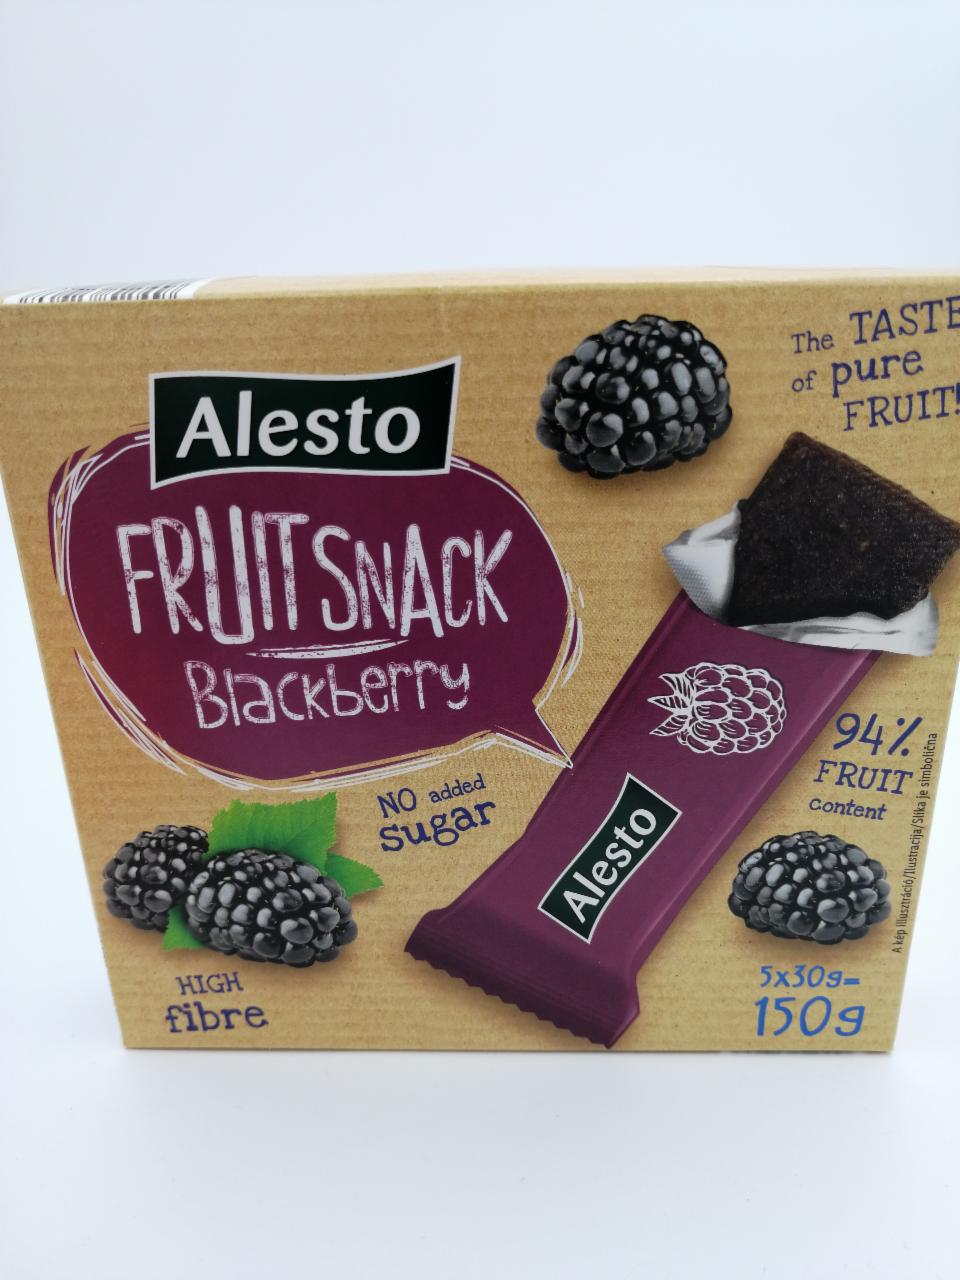 Képek - Alesto fruit snack blackberry 